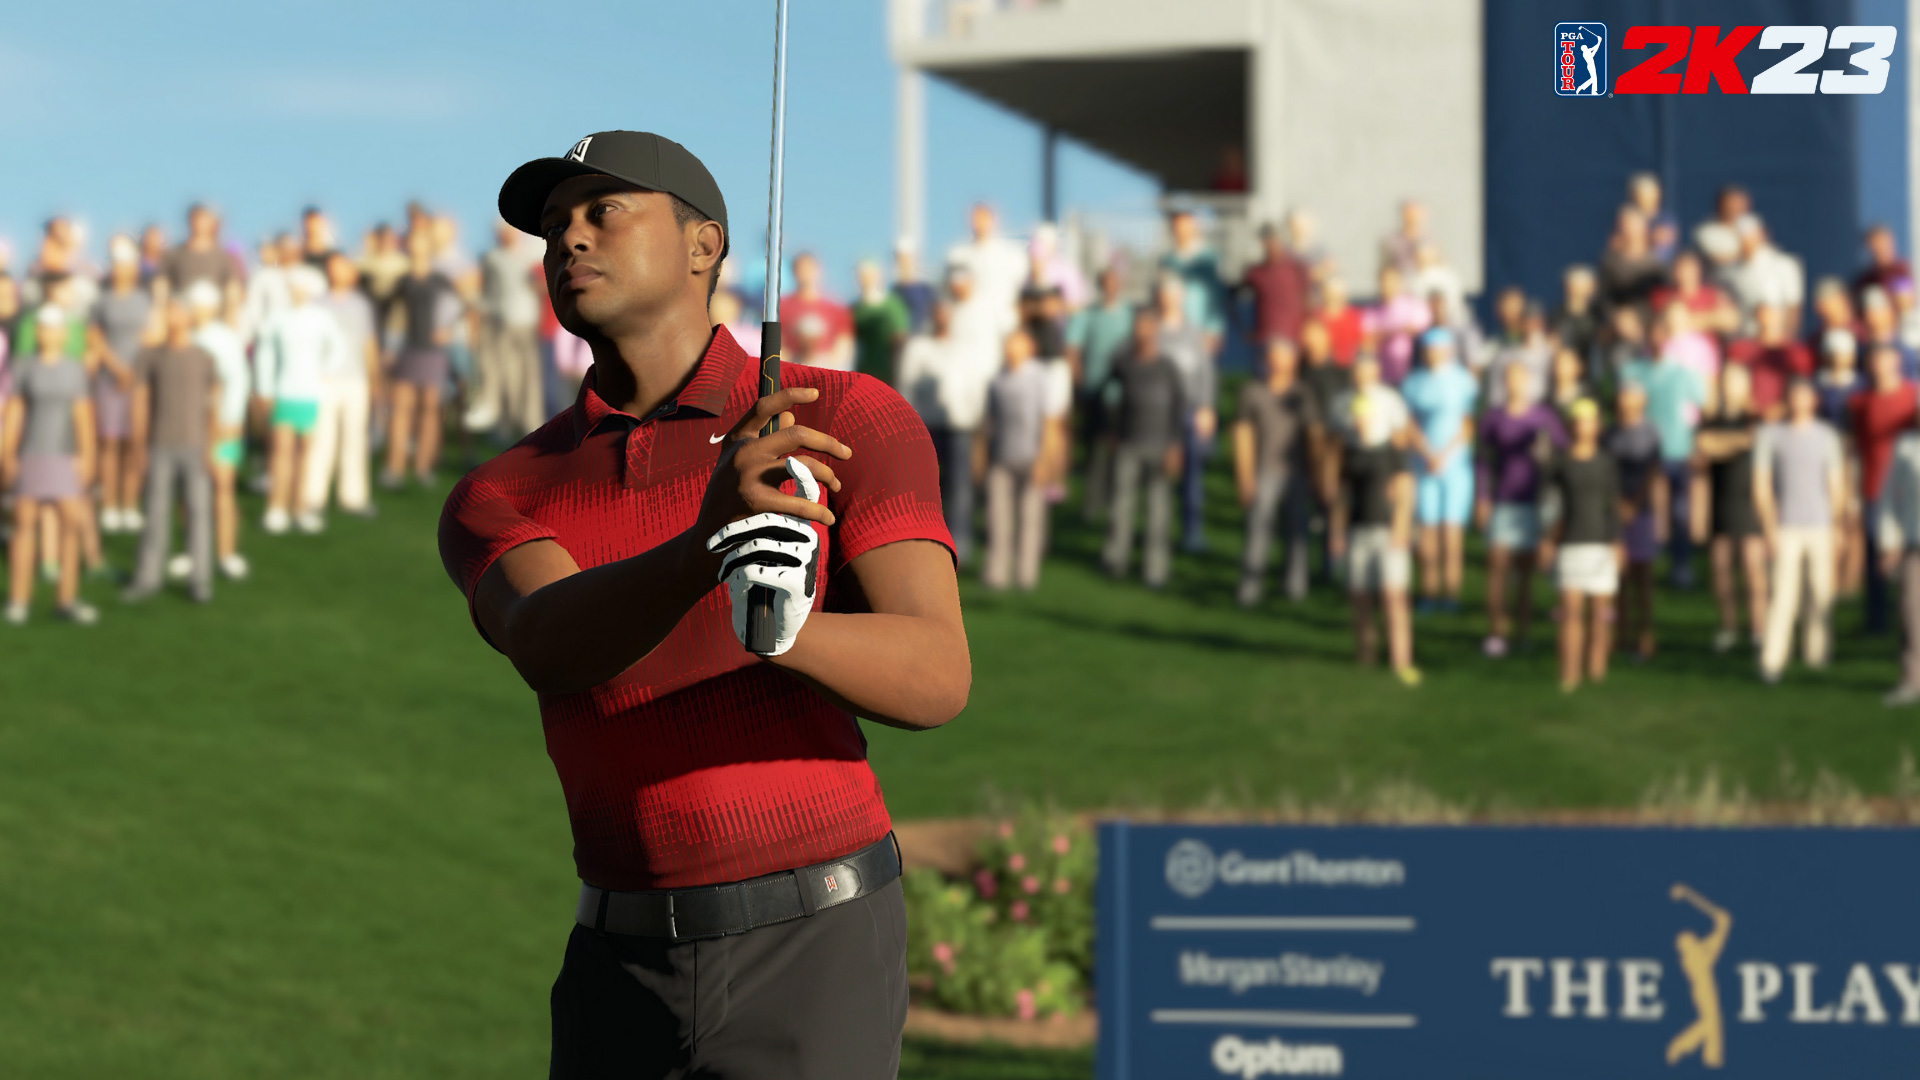 《PGA巡迴賽 2K23》公佈封面人物為「老虎」伍茲